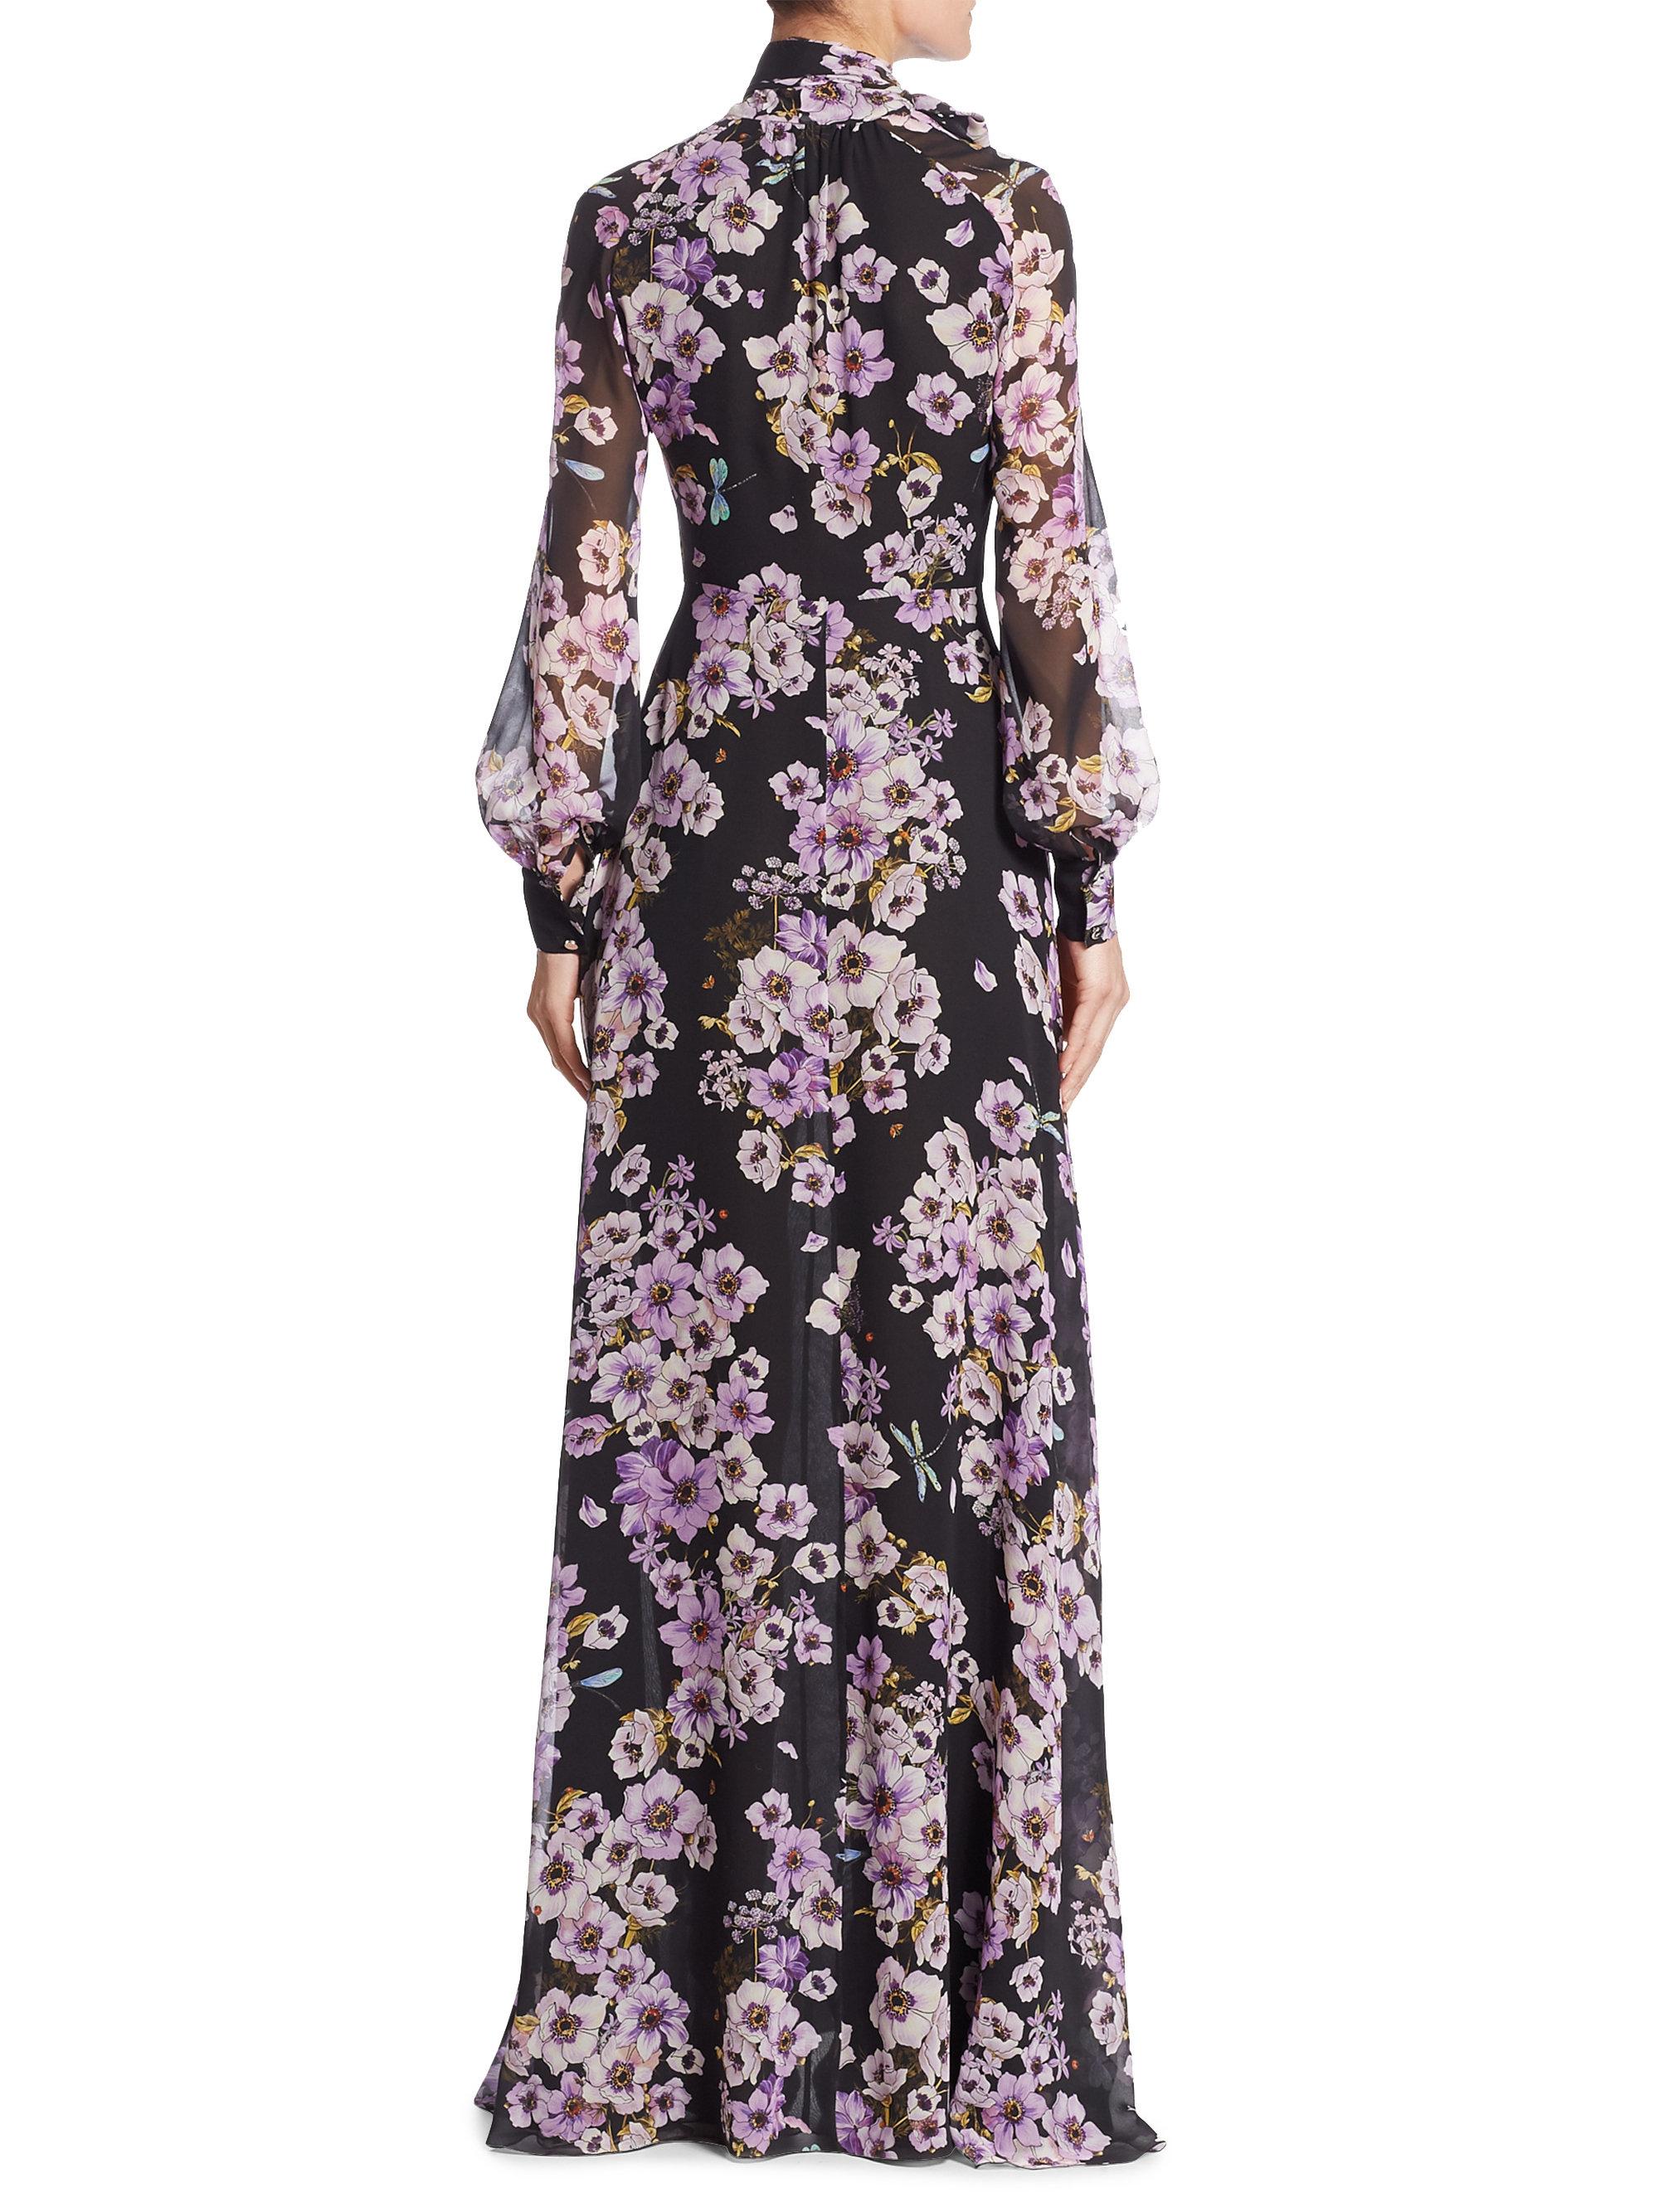 Lyst - Giambattista Valli Anemone Floral Silk Maxi Dress in Black